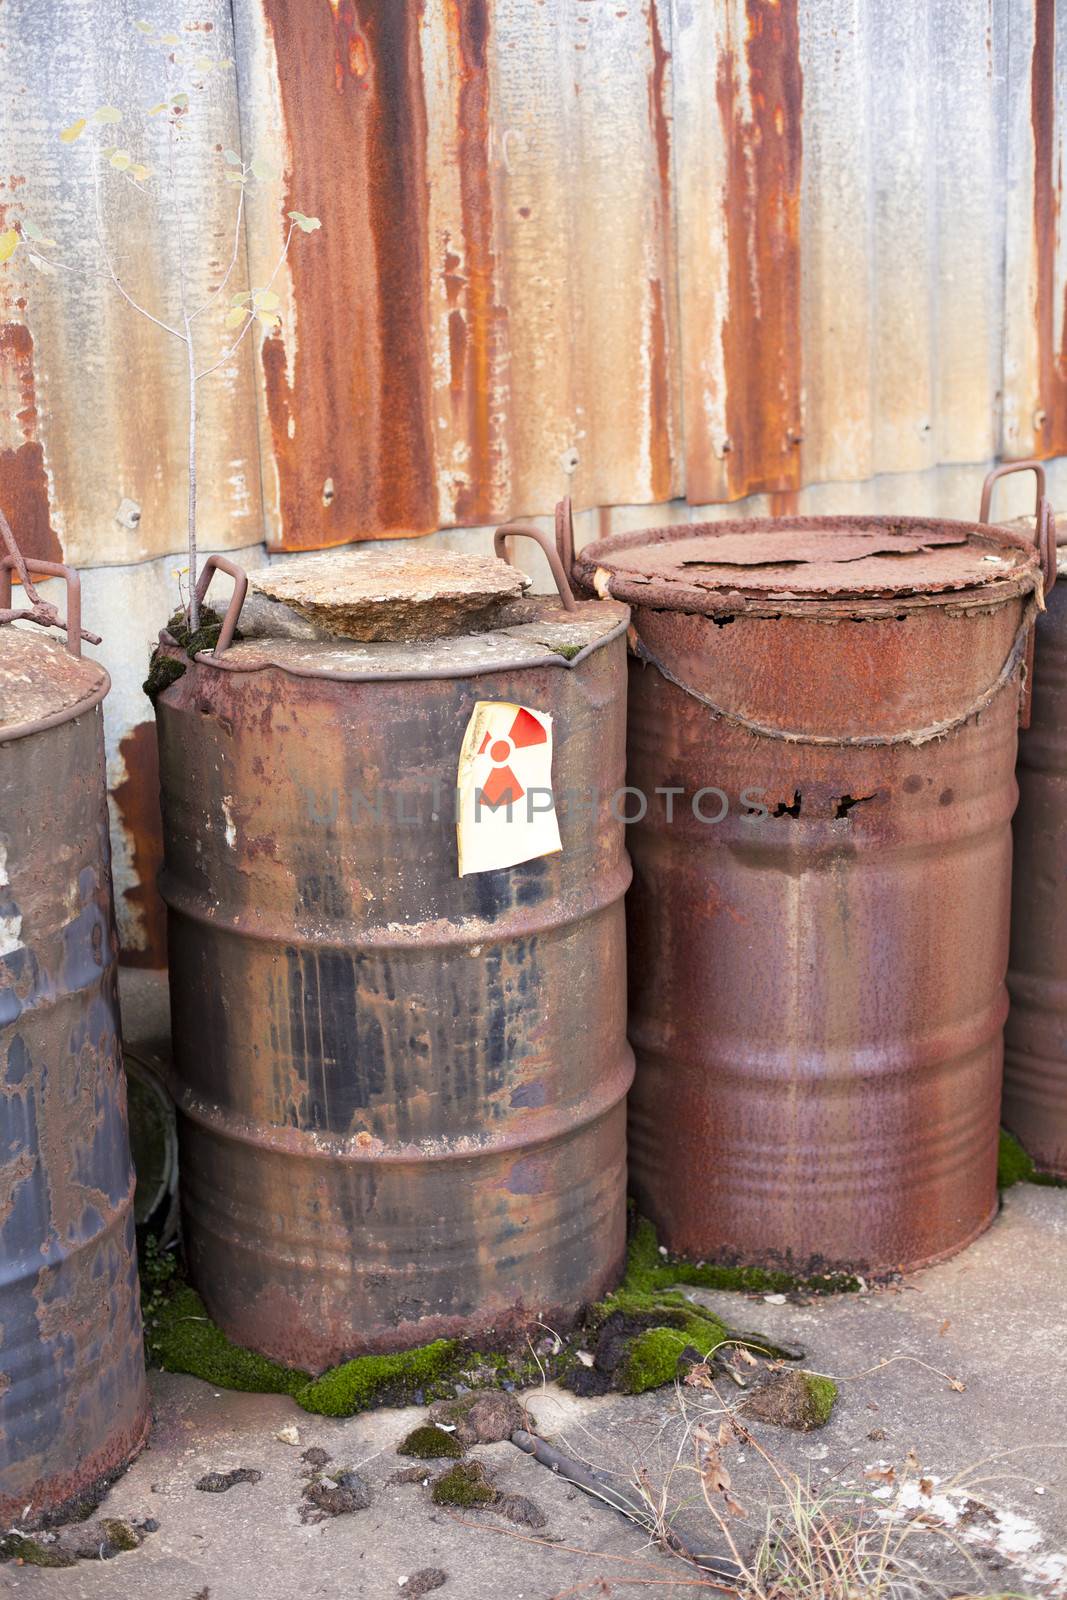 Rusty barrels with radioactive waste disposal